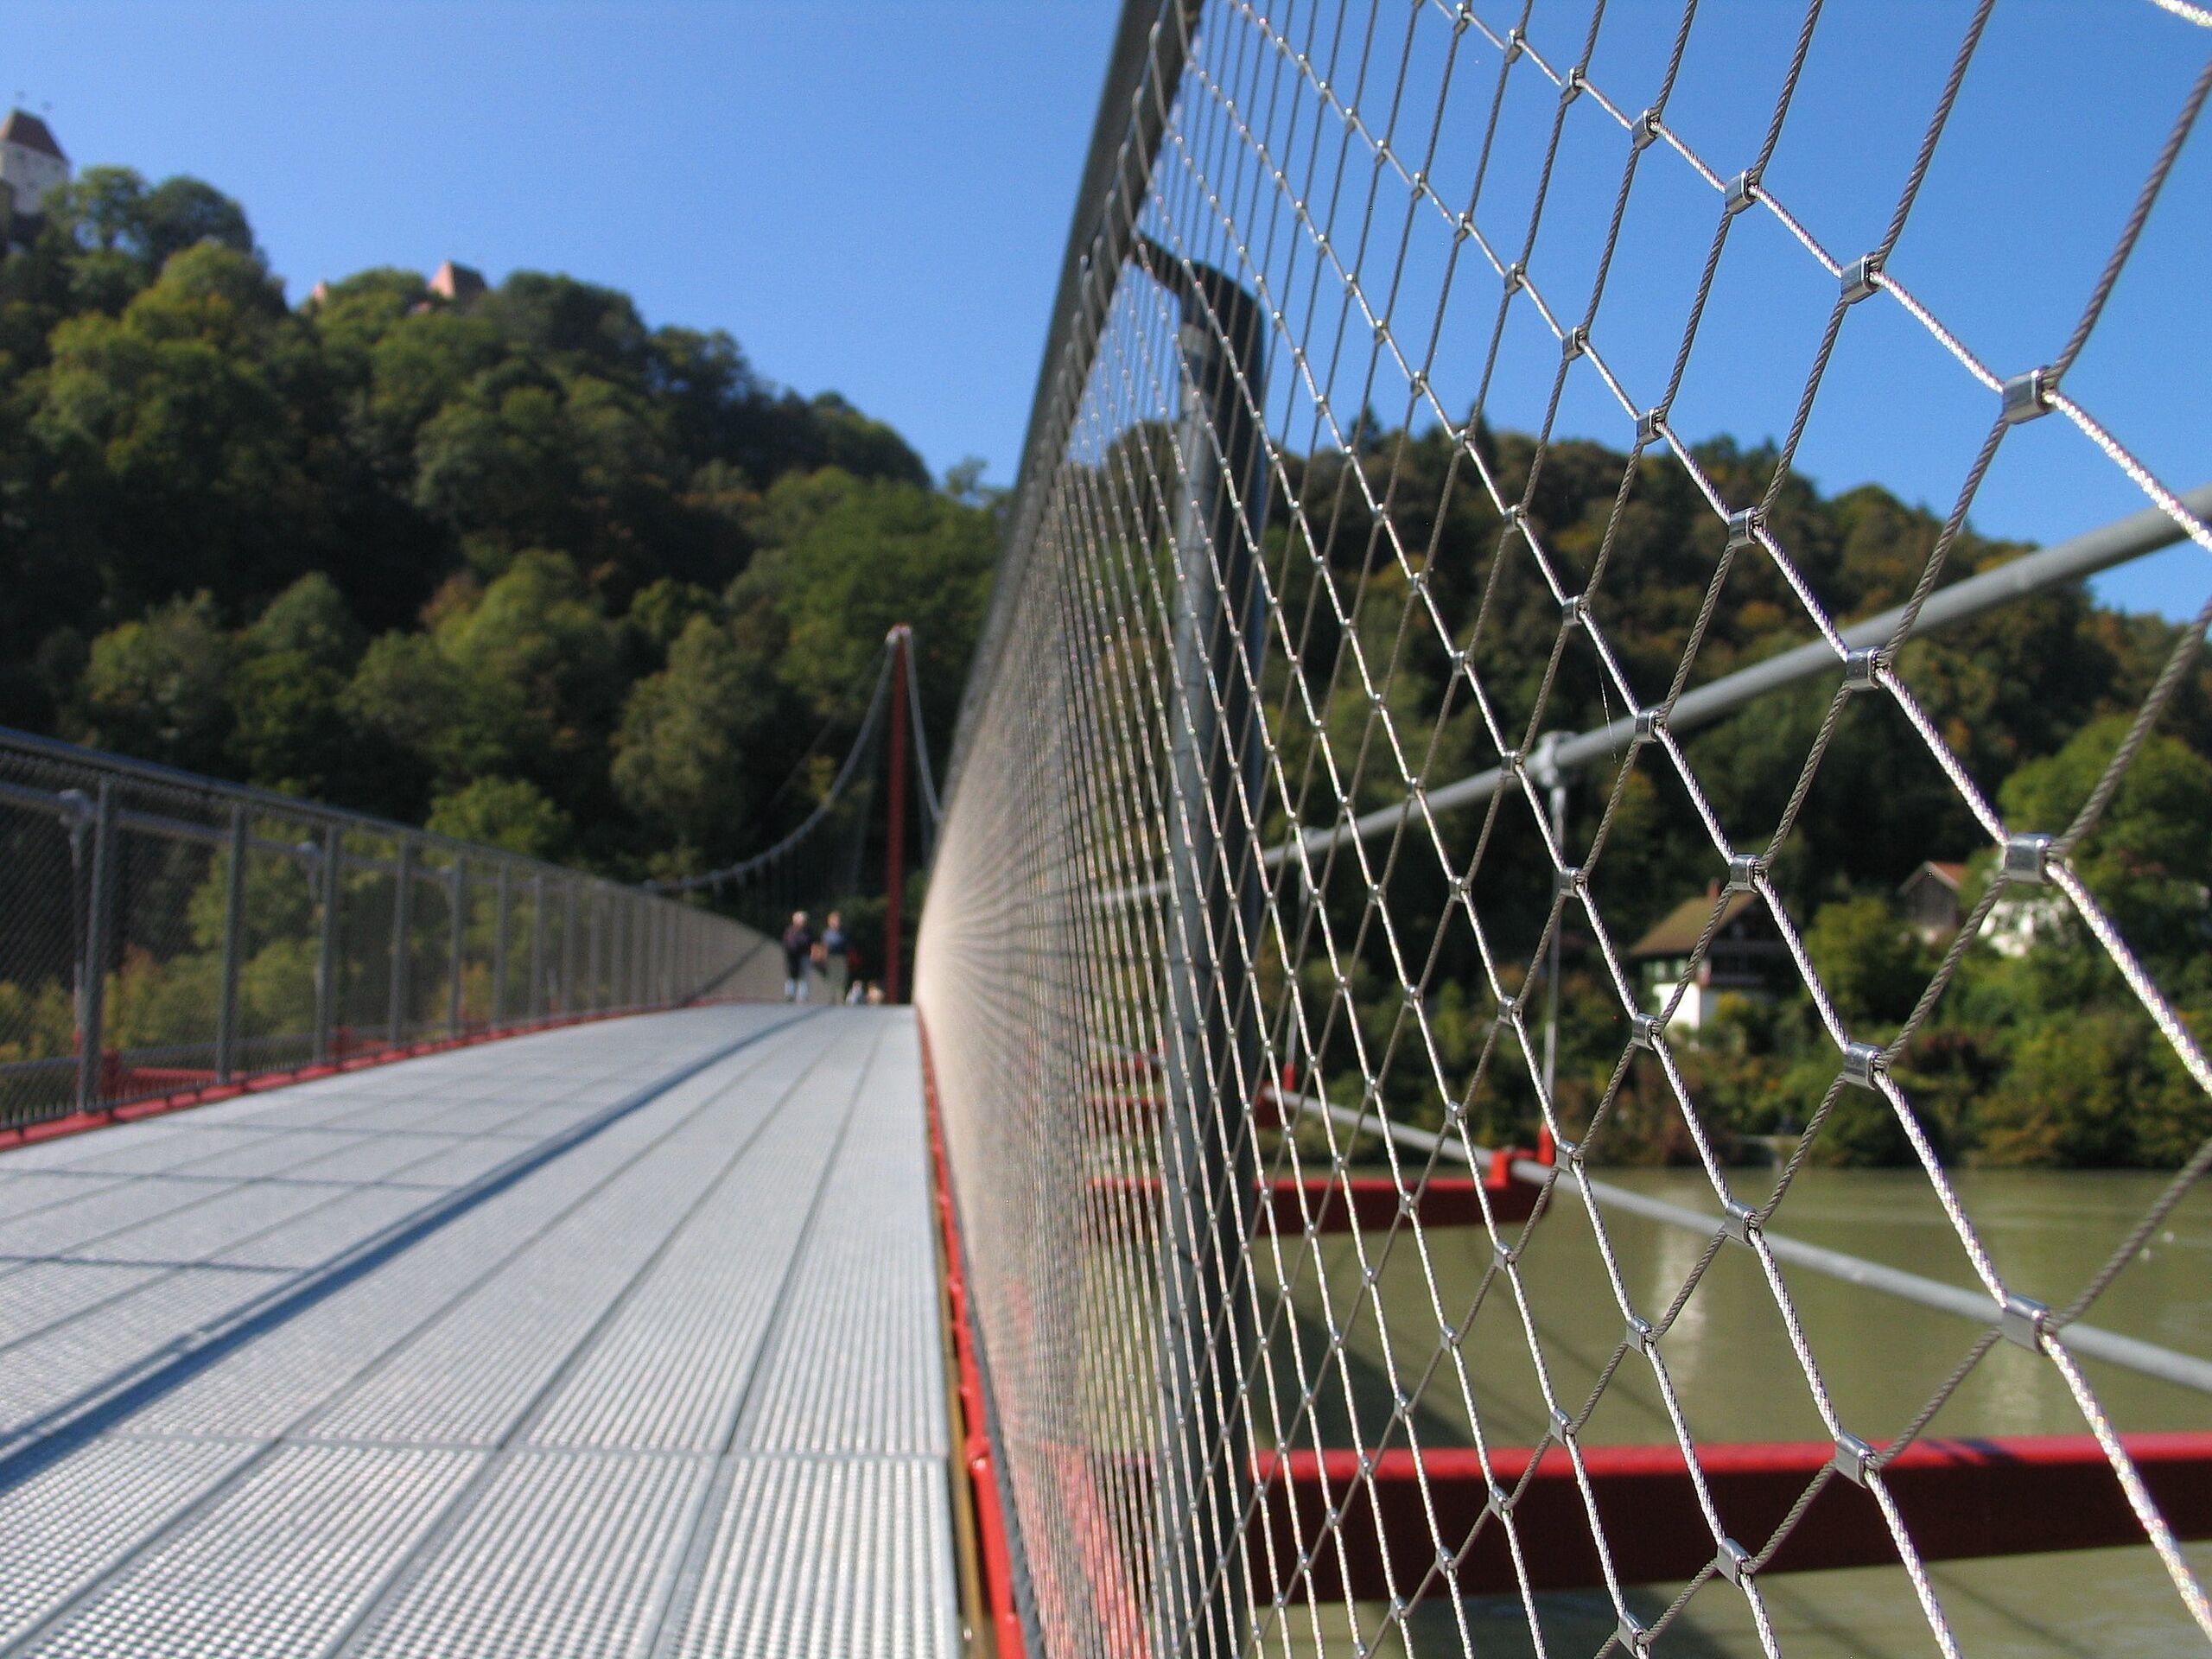 X-TEND balustrade infill mesh stainless steel mesh bridge